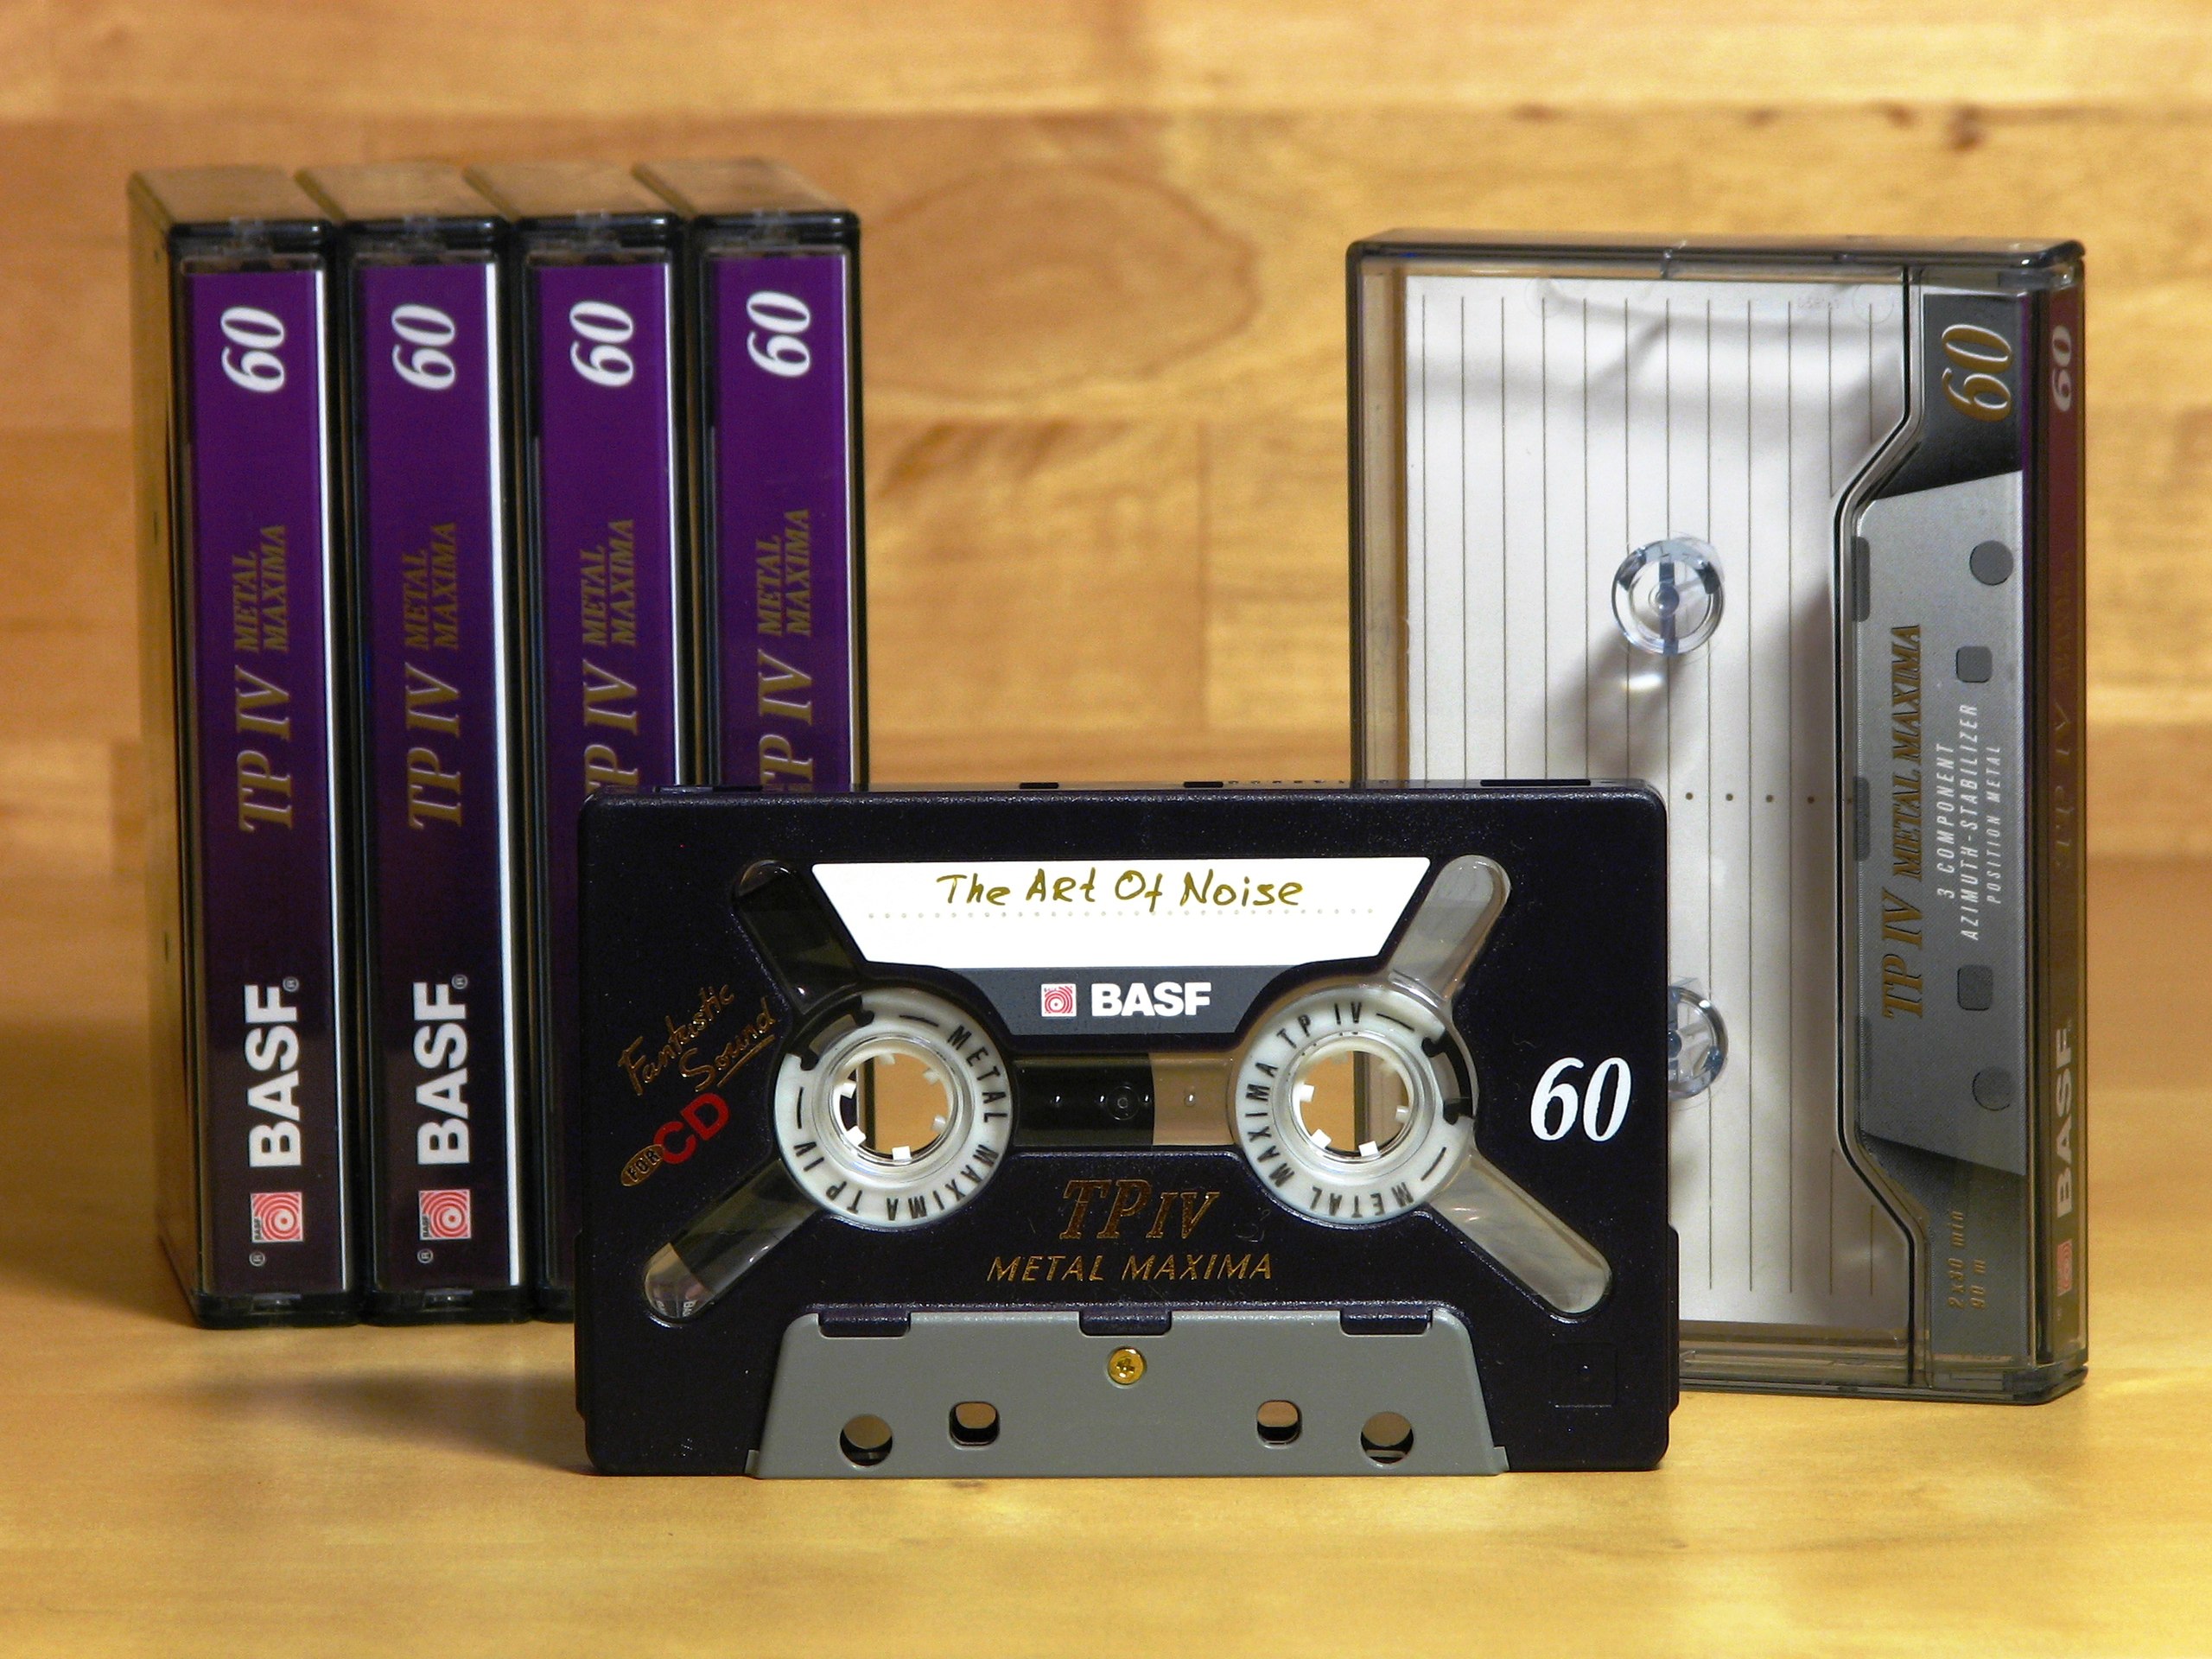 File:Compact Cassette   BASF TP IV Metal Maxima .JPG   Wikimedia